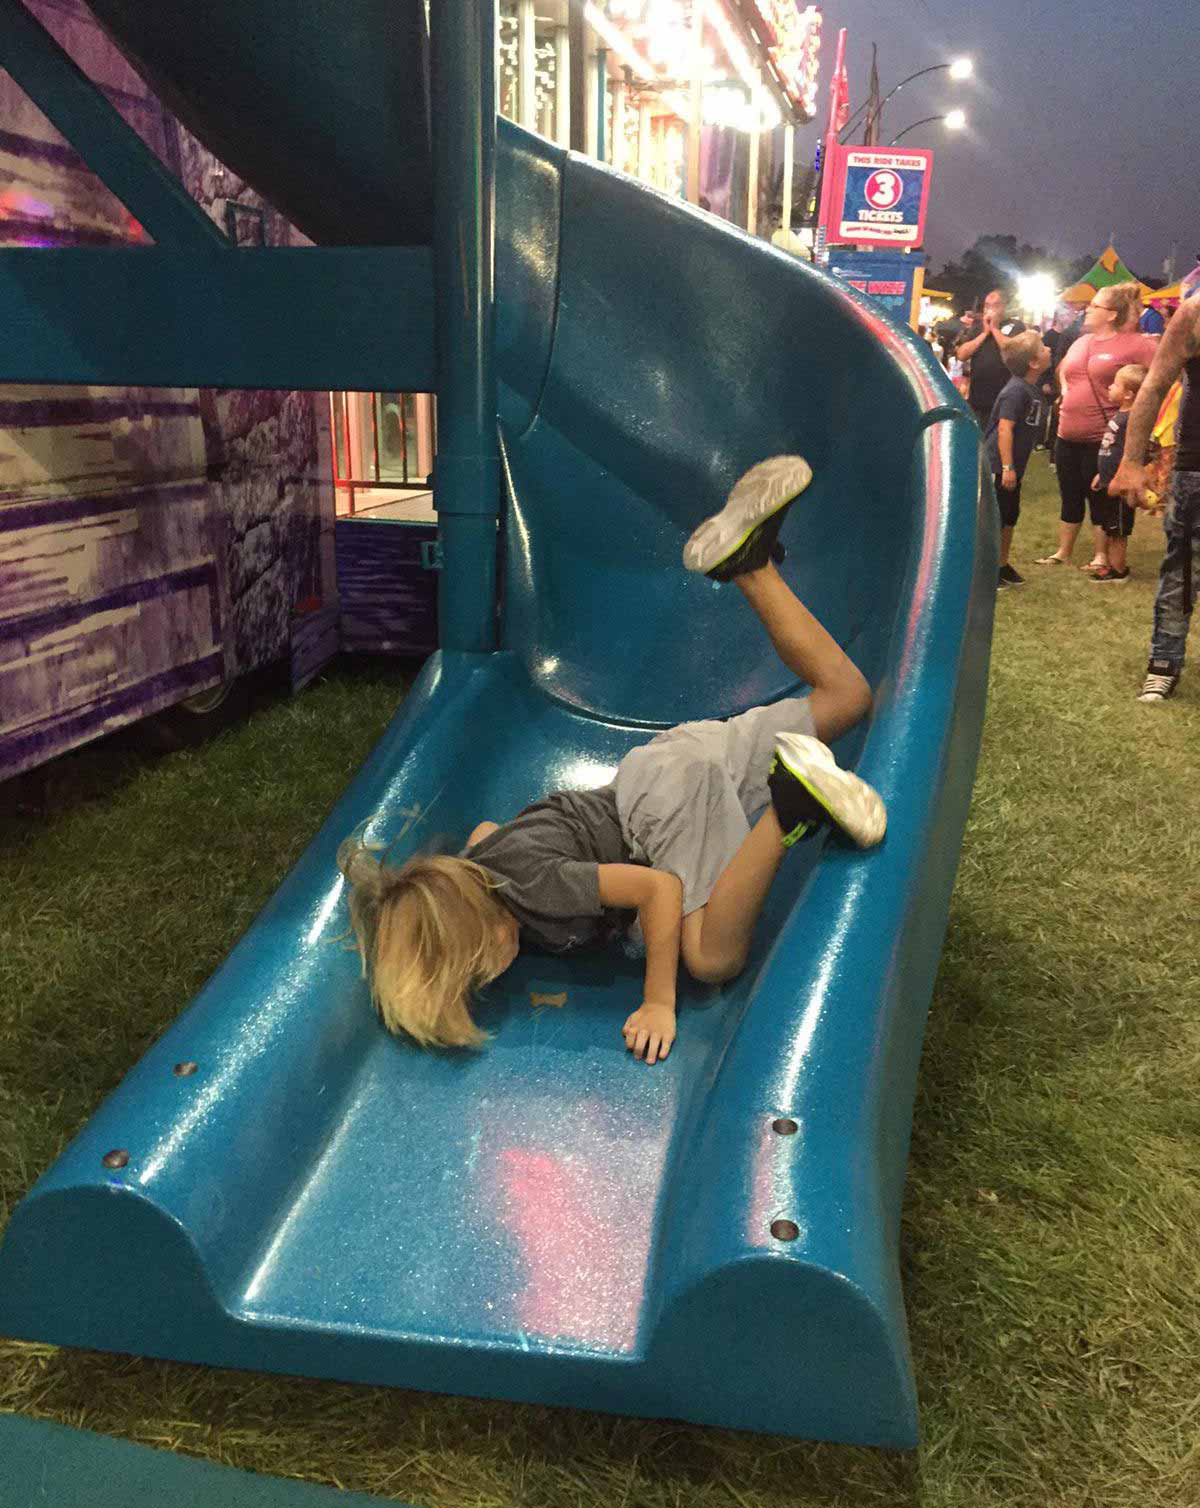 My friend’s kid enjoyed the fair this year